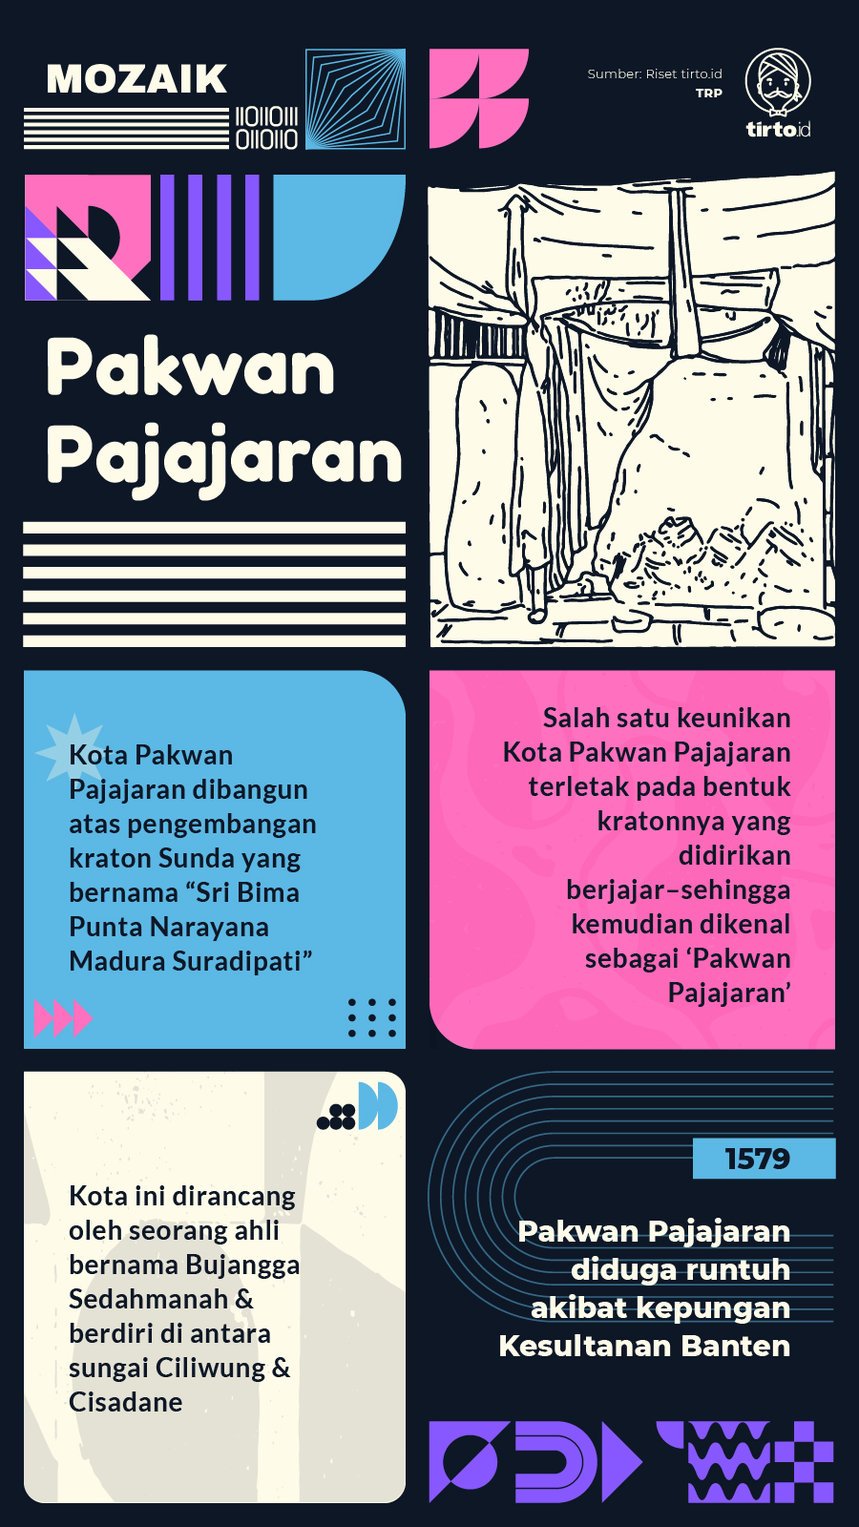 Infografik Mozaik Pakwan Pajajaran